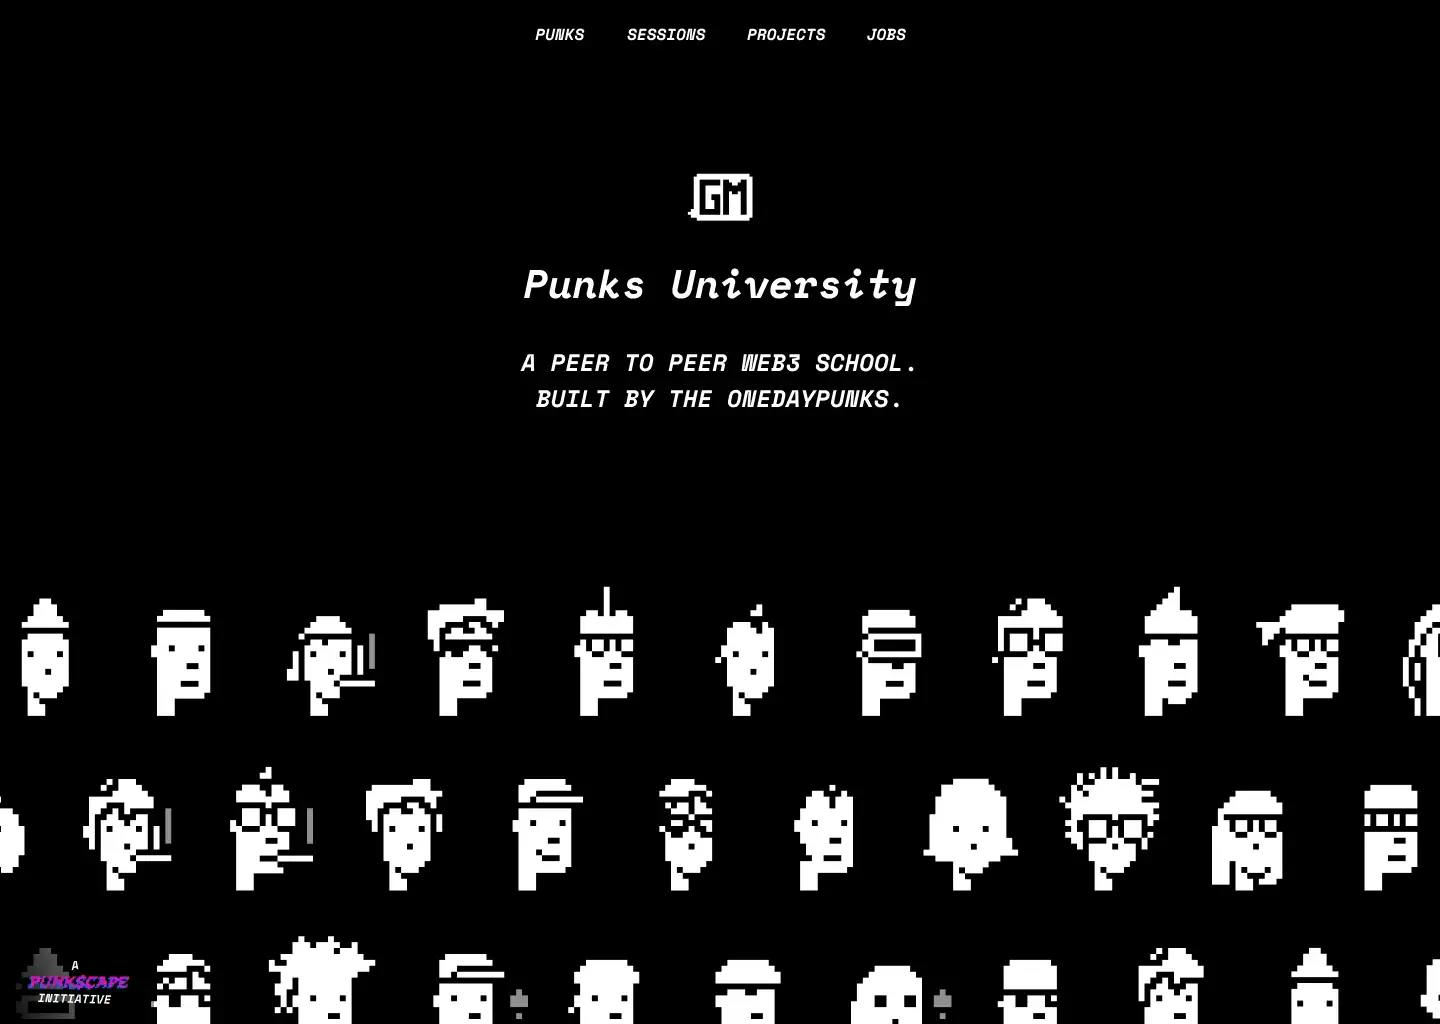 Punks.University Home Page